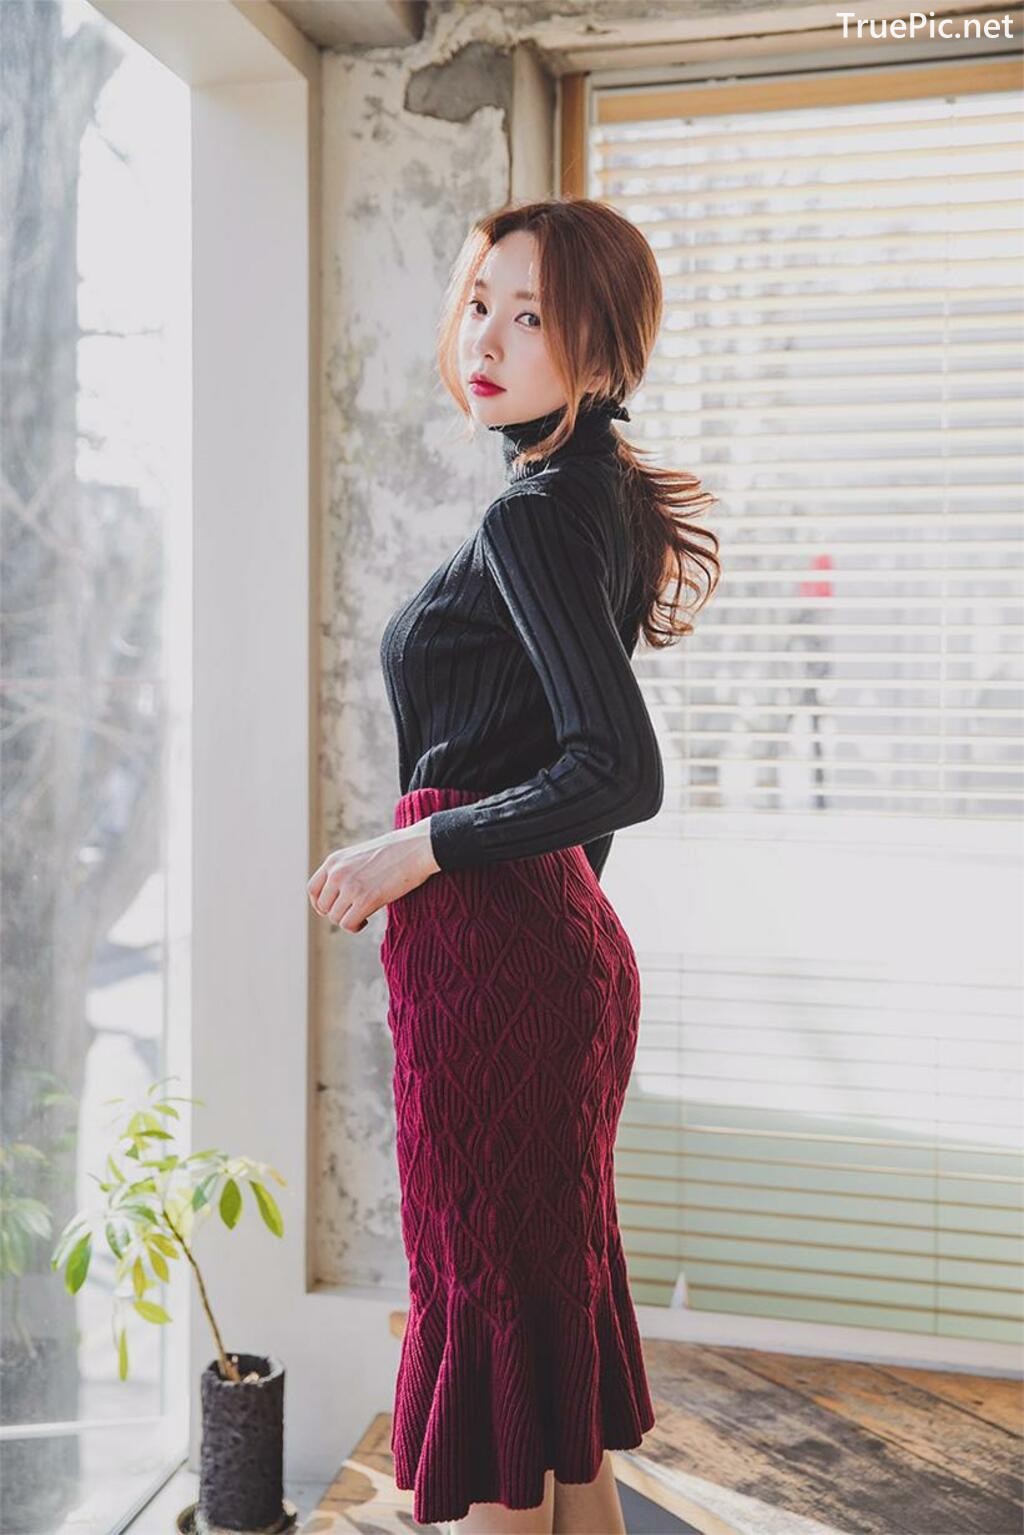 Image-Korean-Fashion-Model-Park-Soo-Yeon-Beautiful-Winter-Dress-Collection-TruePic.net- Picture-55